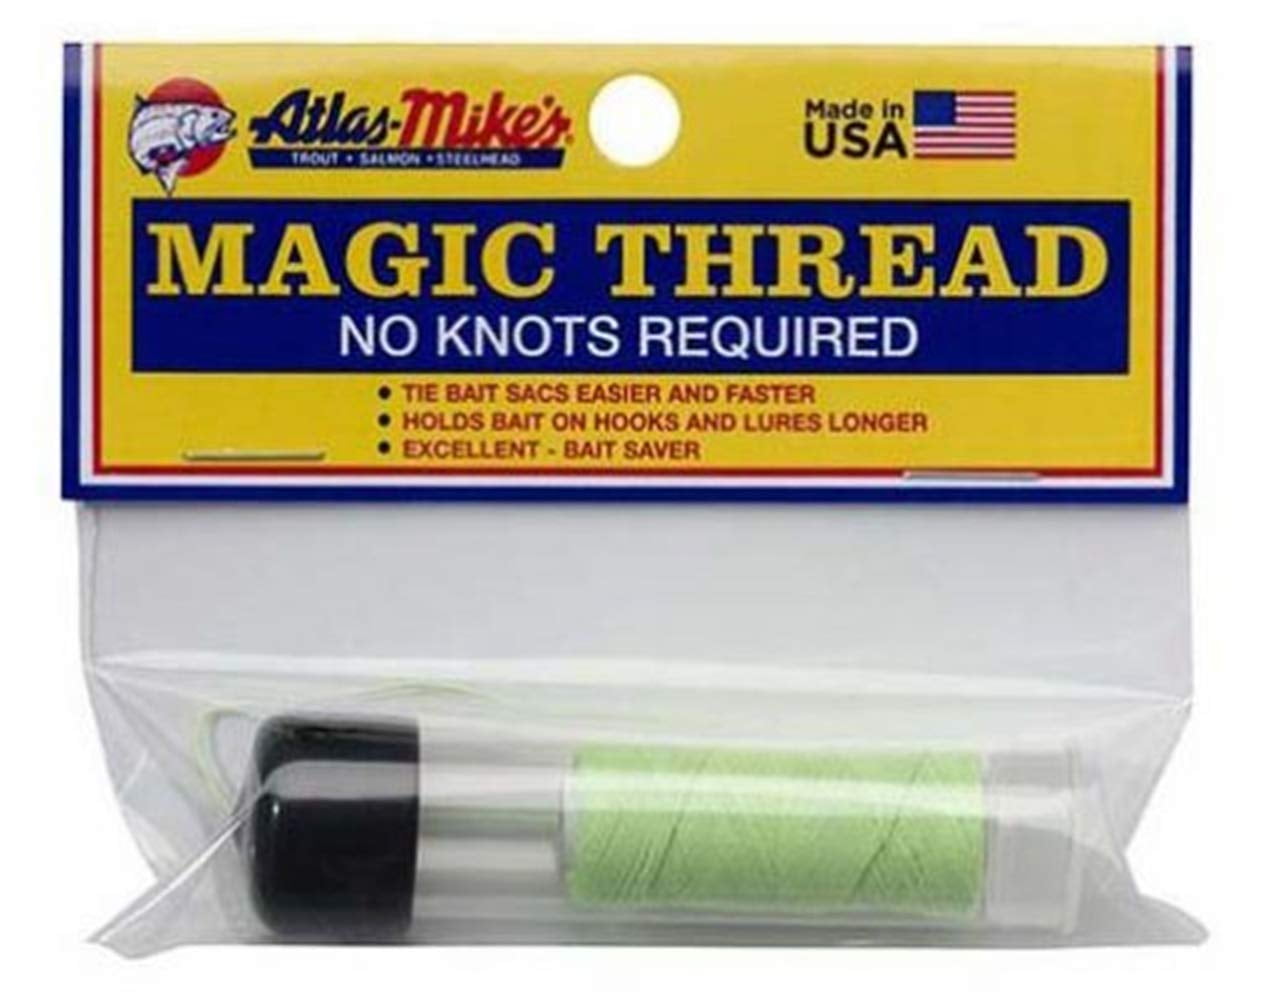 Atlas Magic Thread with Dispenser Chartreuse